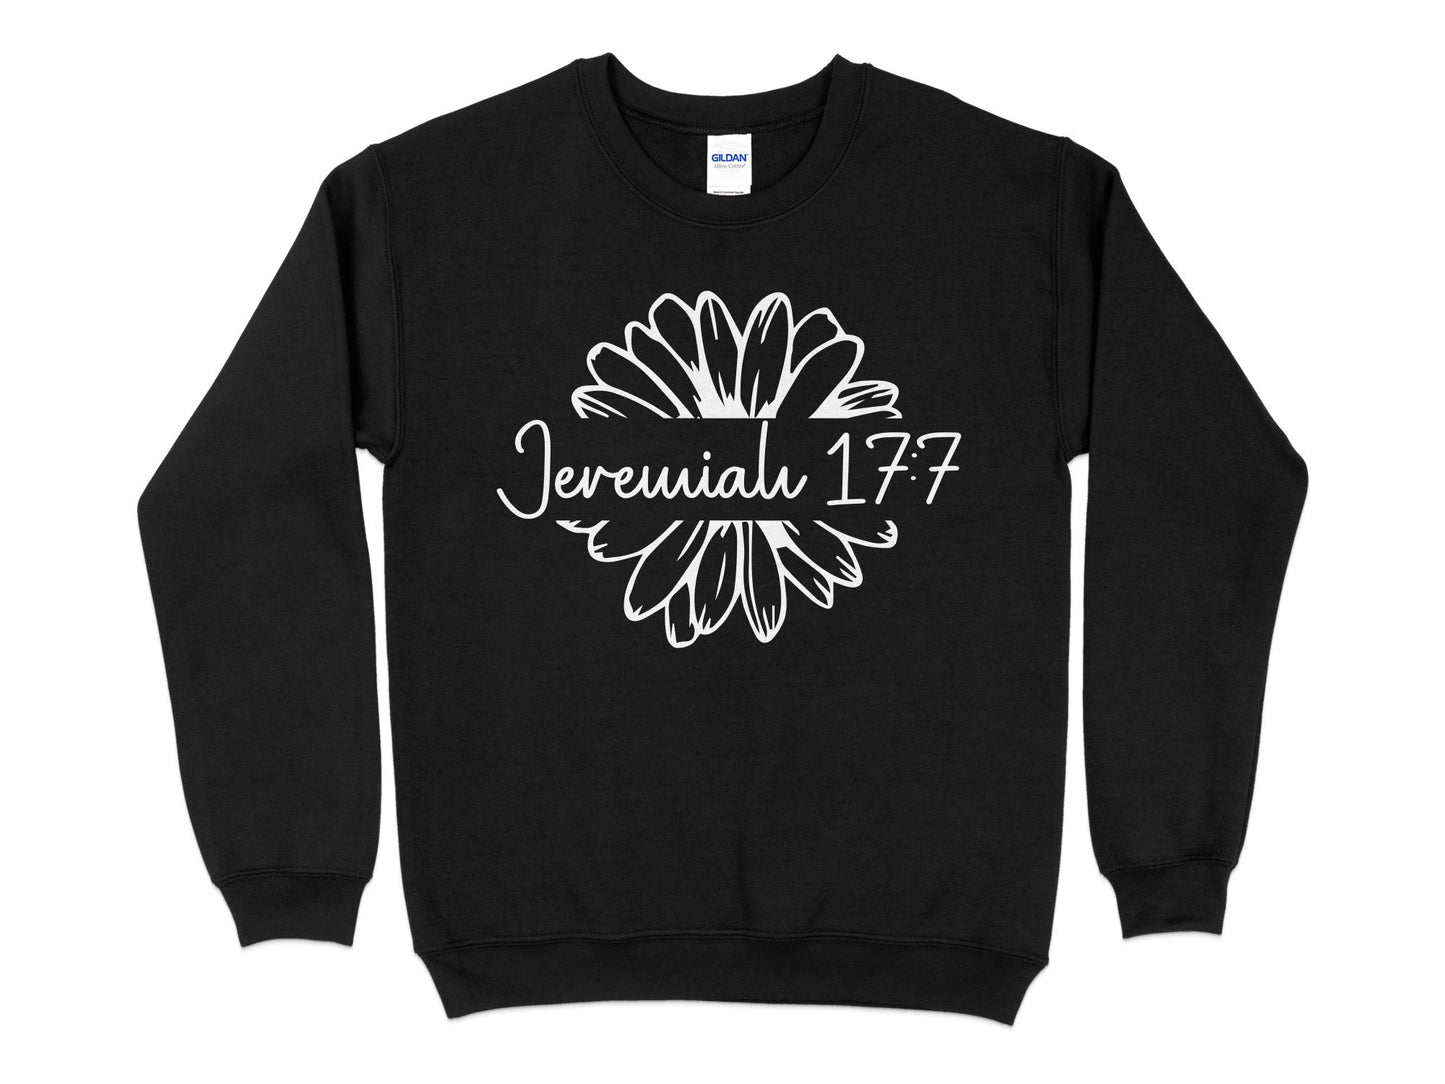 Unisex Jeremiah 17:7 Floral Sweatshirt, Christian Scripture Sweater, Bible Verse Pullover, Casual Spiritual Clothing, Faith-Based Top - Mardonyx Sweatshirt S / Black